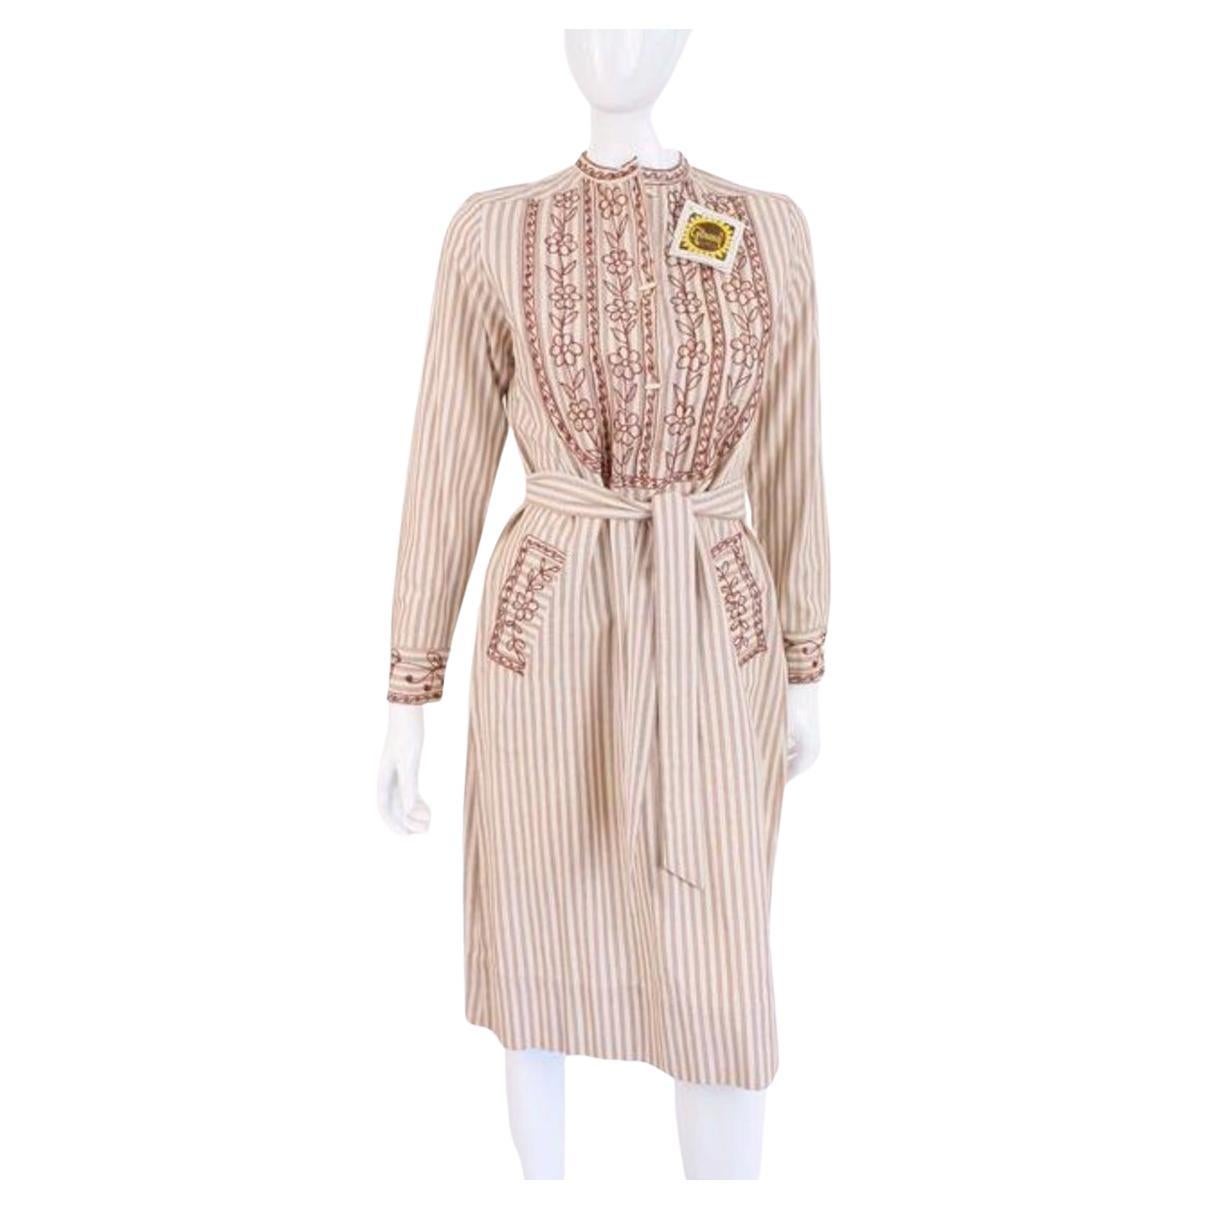 GIRASOL - Robe mexicaine vintage en rupture de stock, années 70